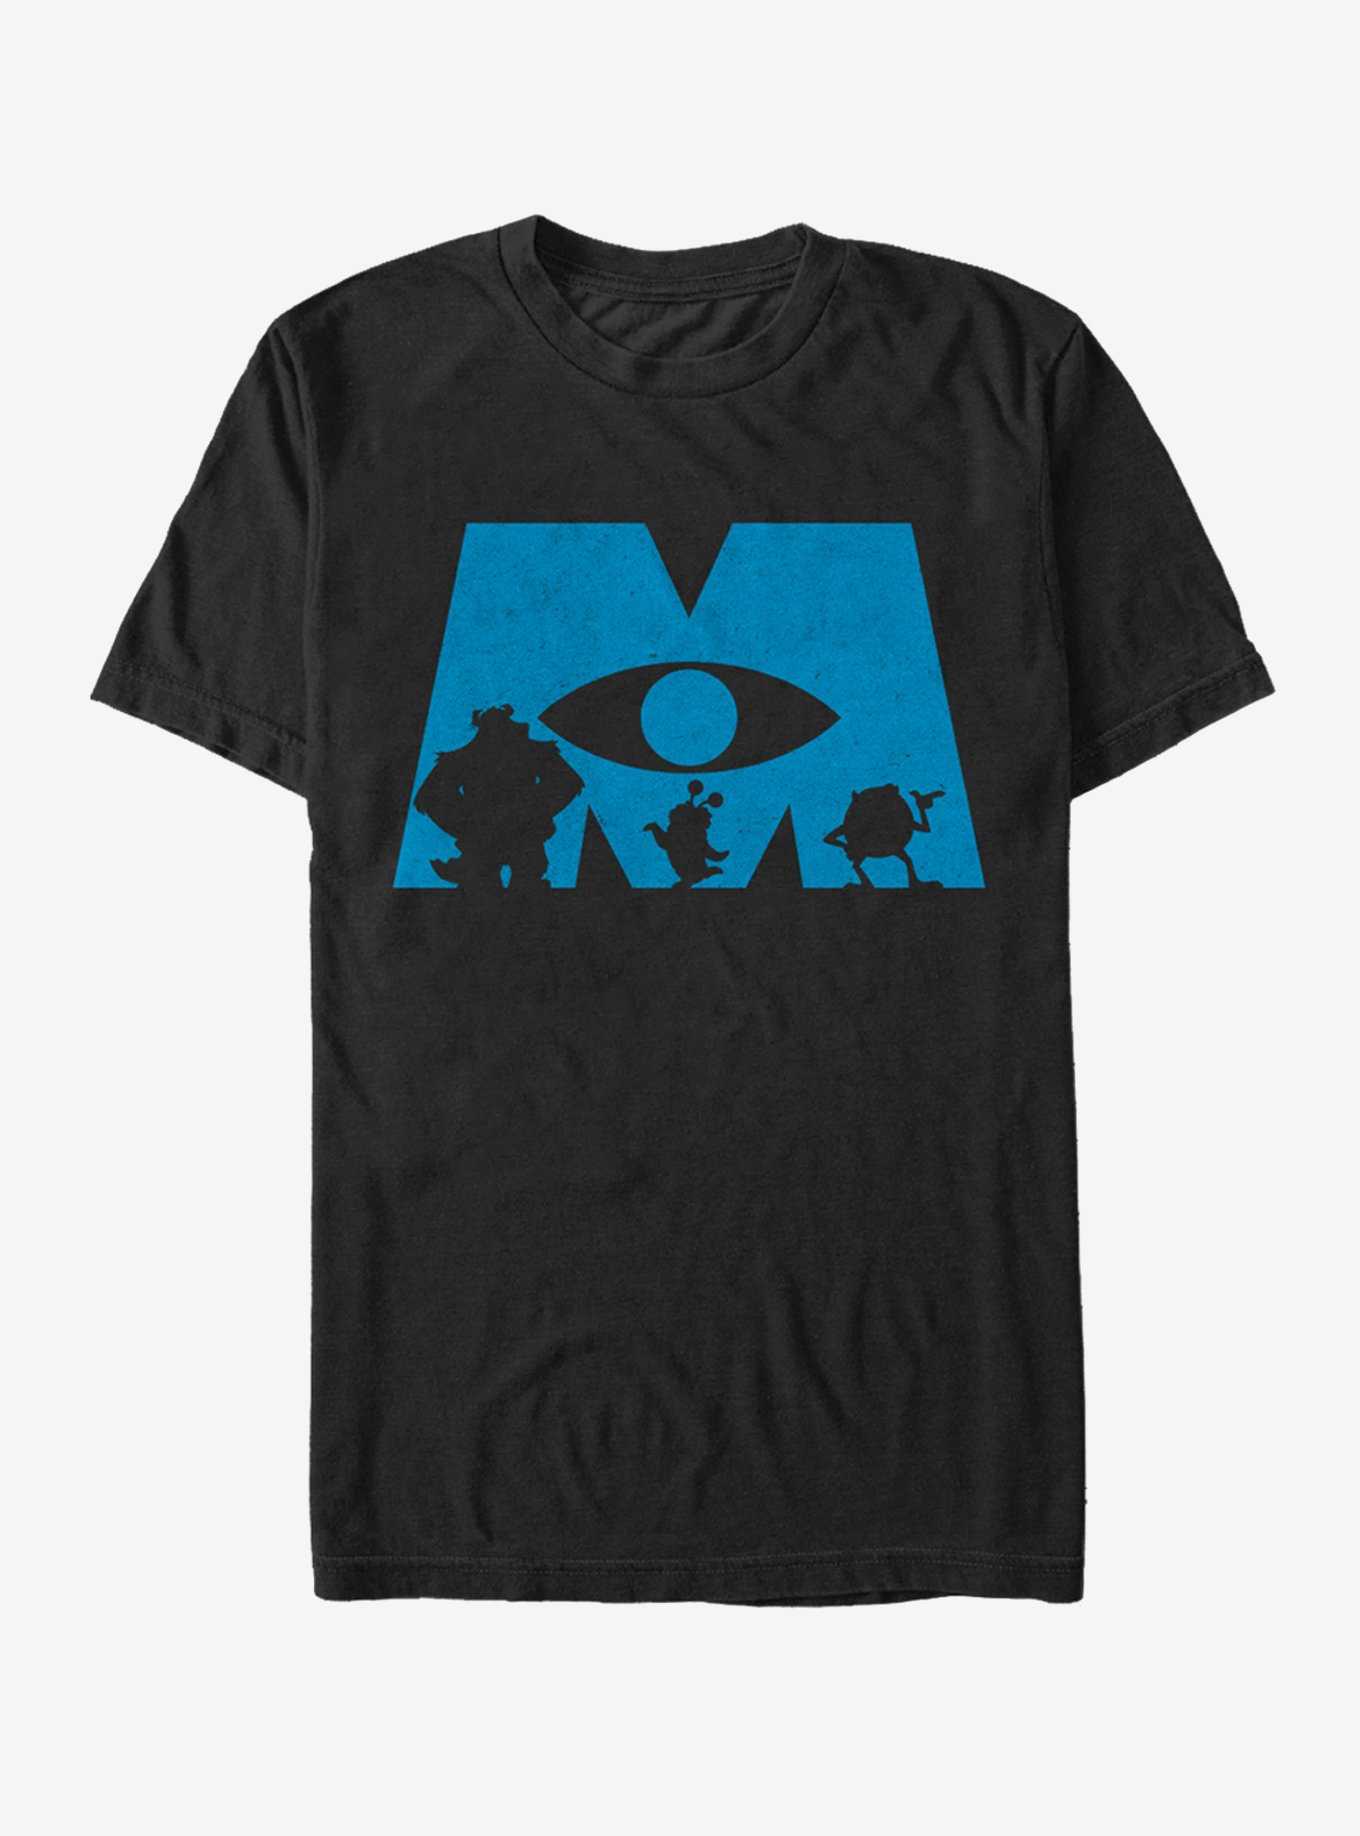 Monsters Inc. Logo Silhouette T-Shirt, , hi-res